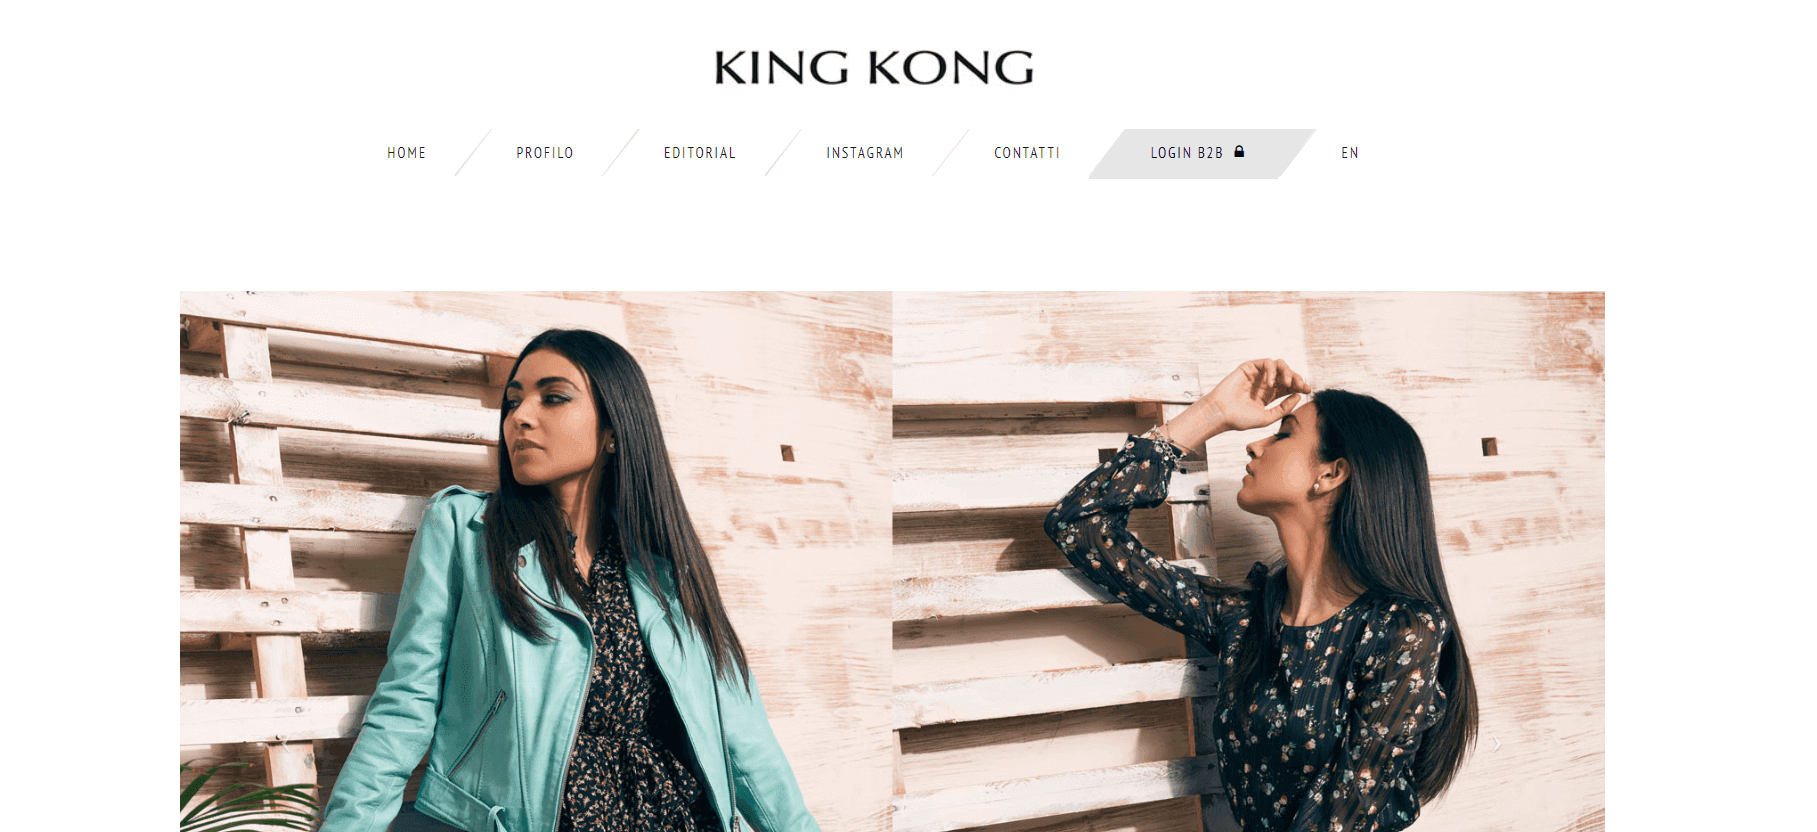 King Kong купить онлайн с доставкой в Казахстан - Meest Shopping - 2